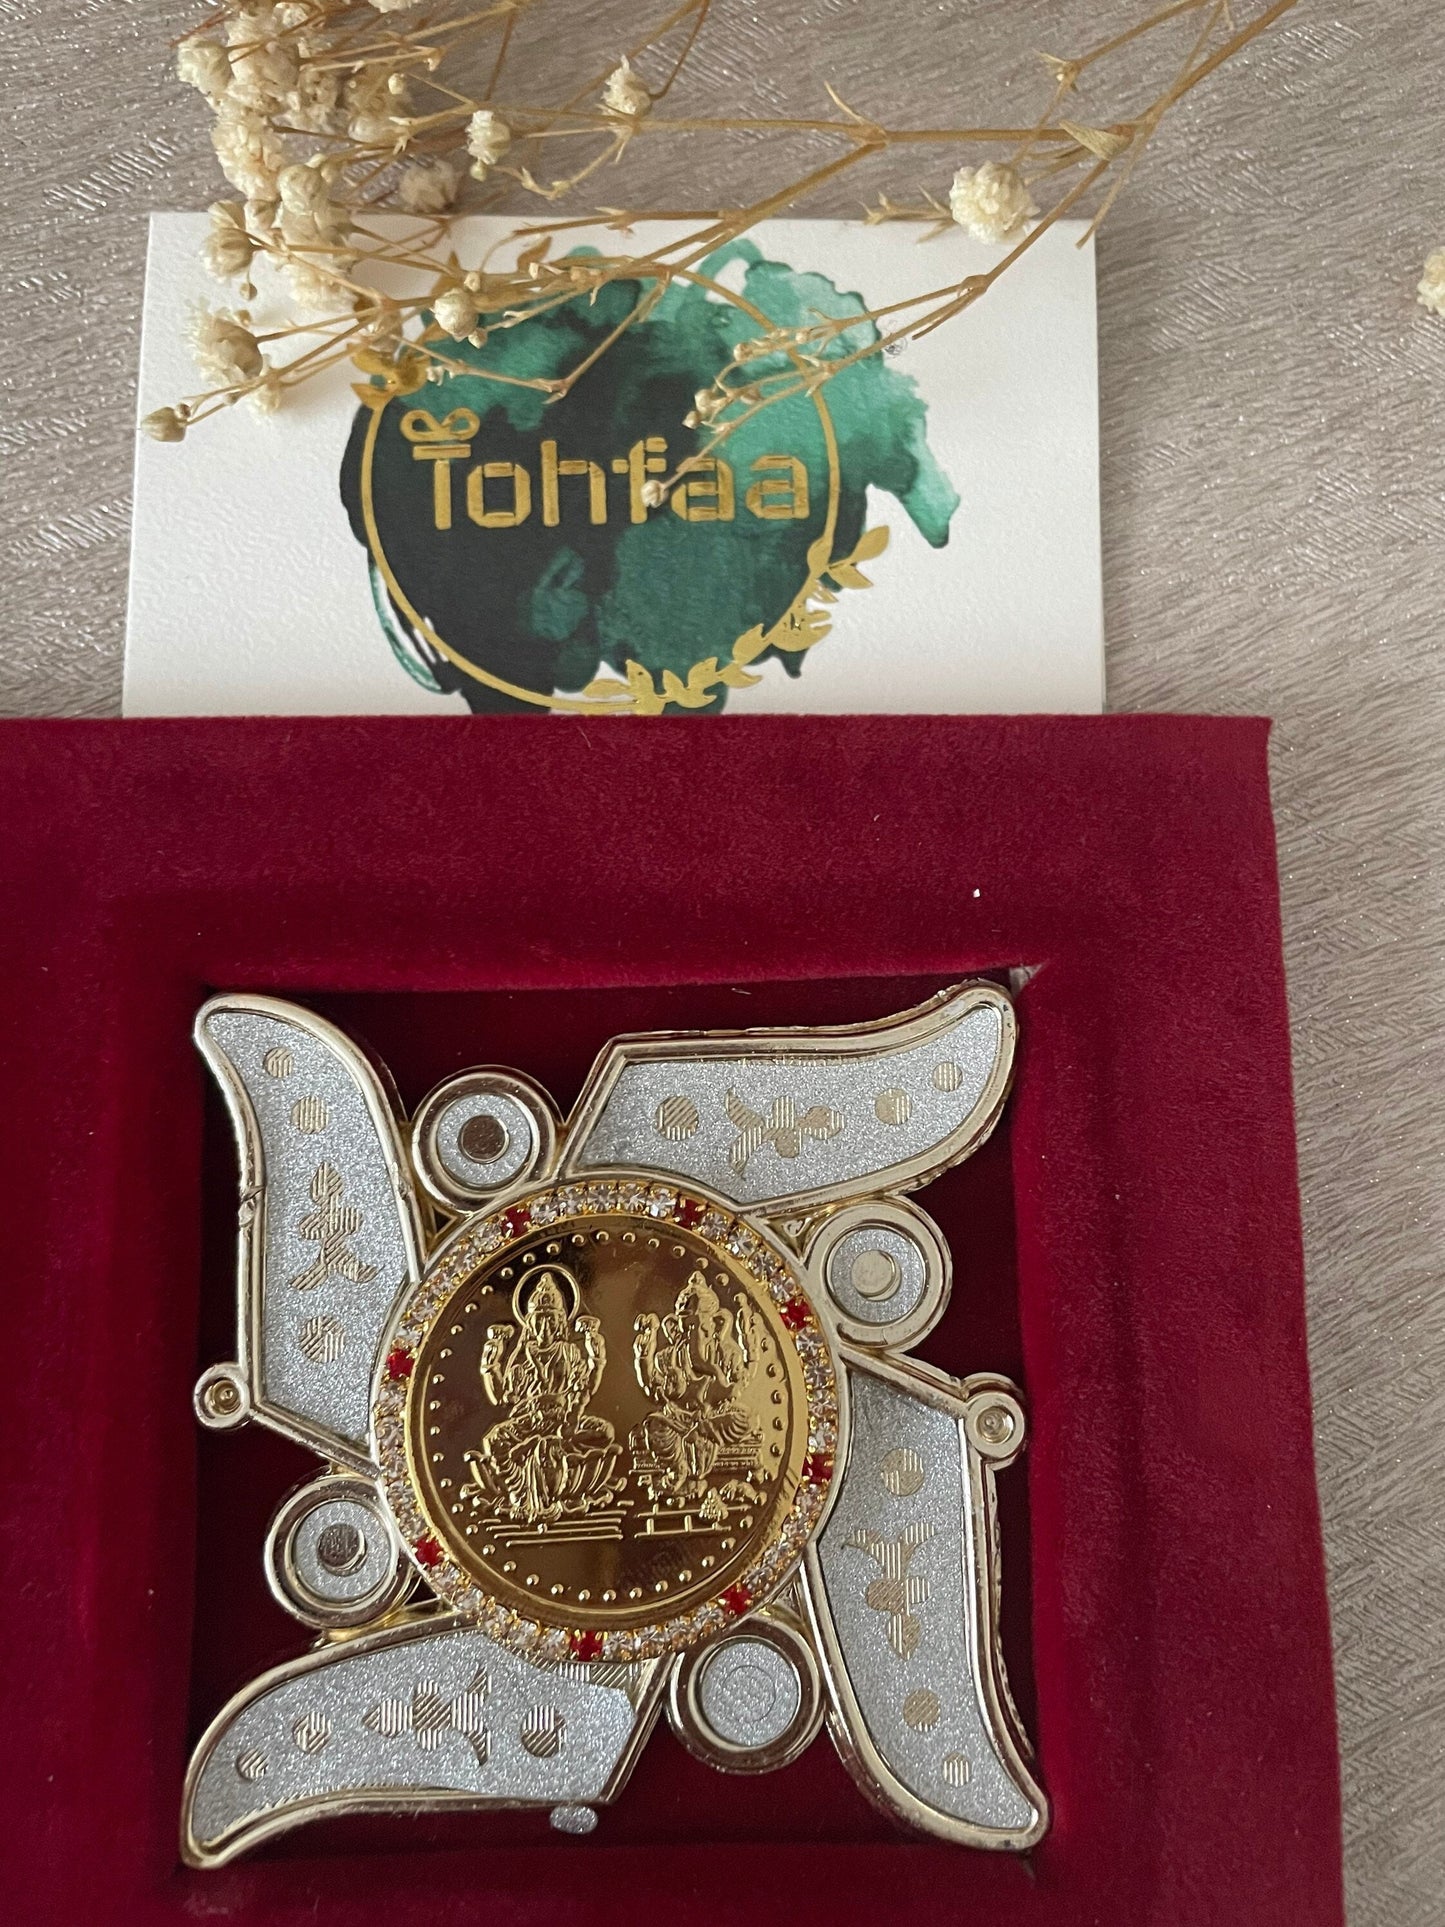 Religious Items| New Year Gifts| Lakshmi Ganesh Coin on Satya Symbol Gift Boxed | Hindu Swastika| New Home| House Warming